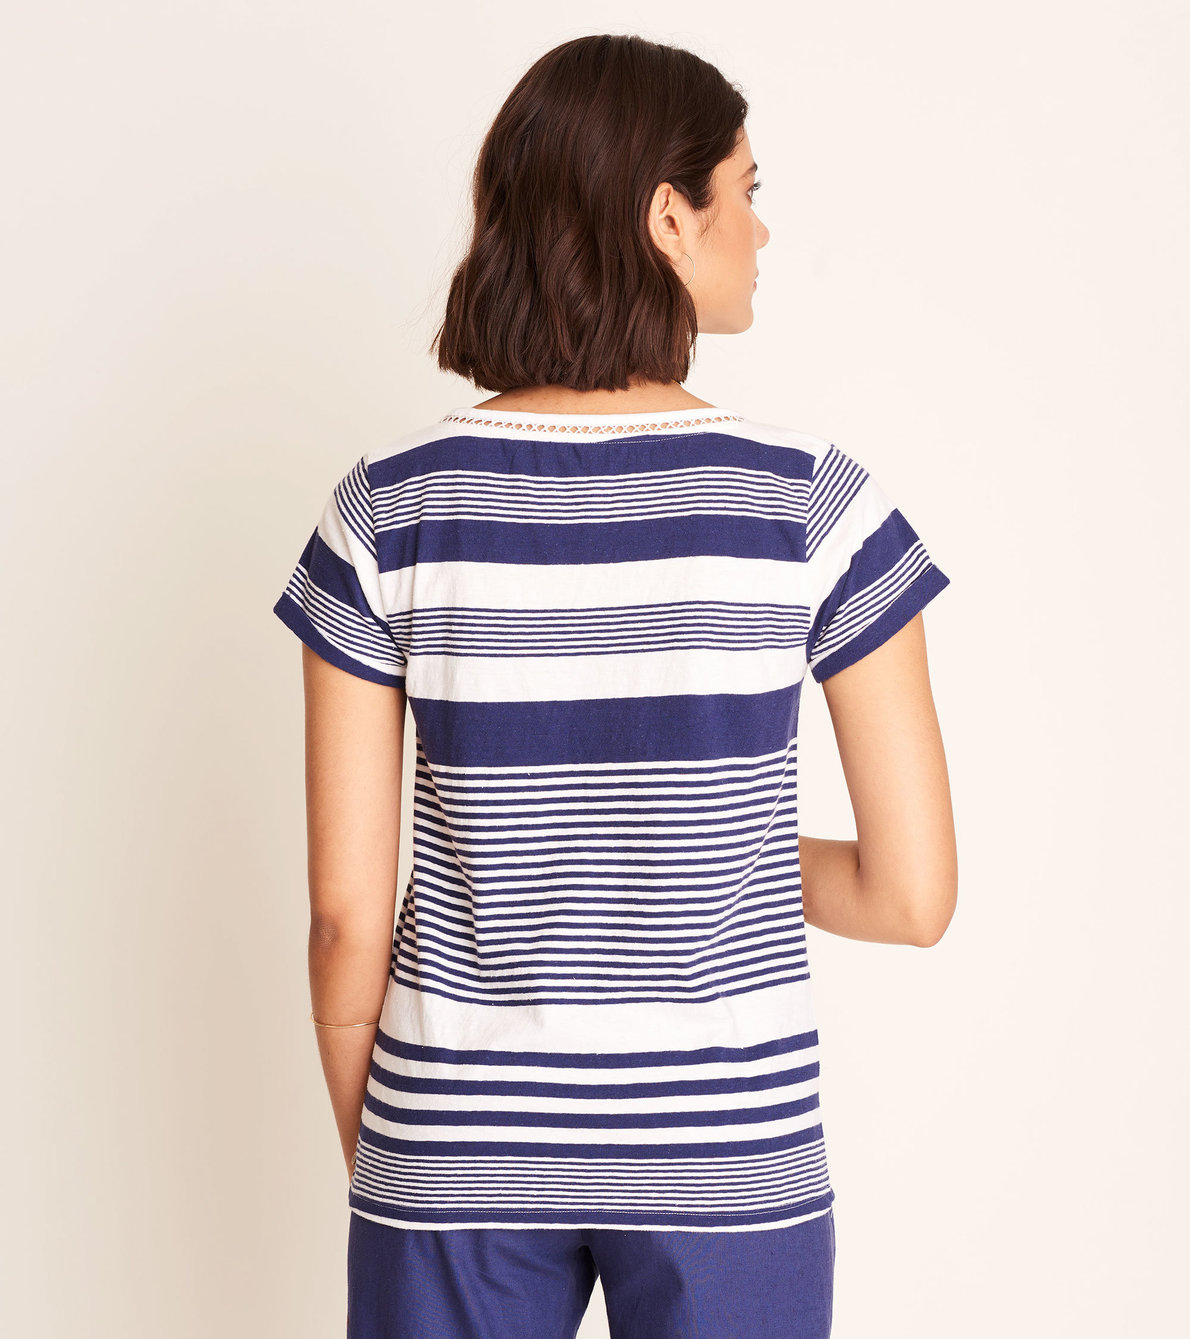 View larger image of Cotton Linen Tee - Patriot Blue Stripes